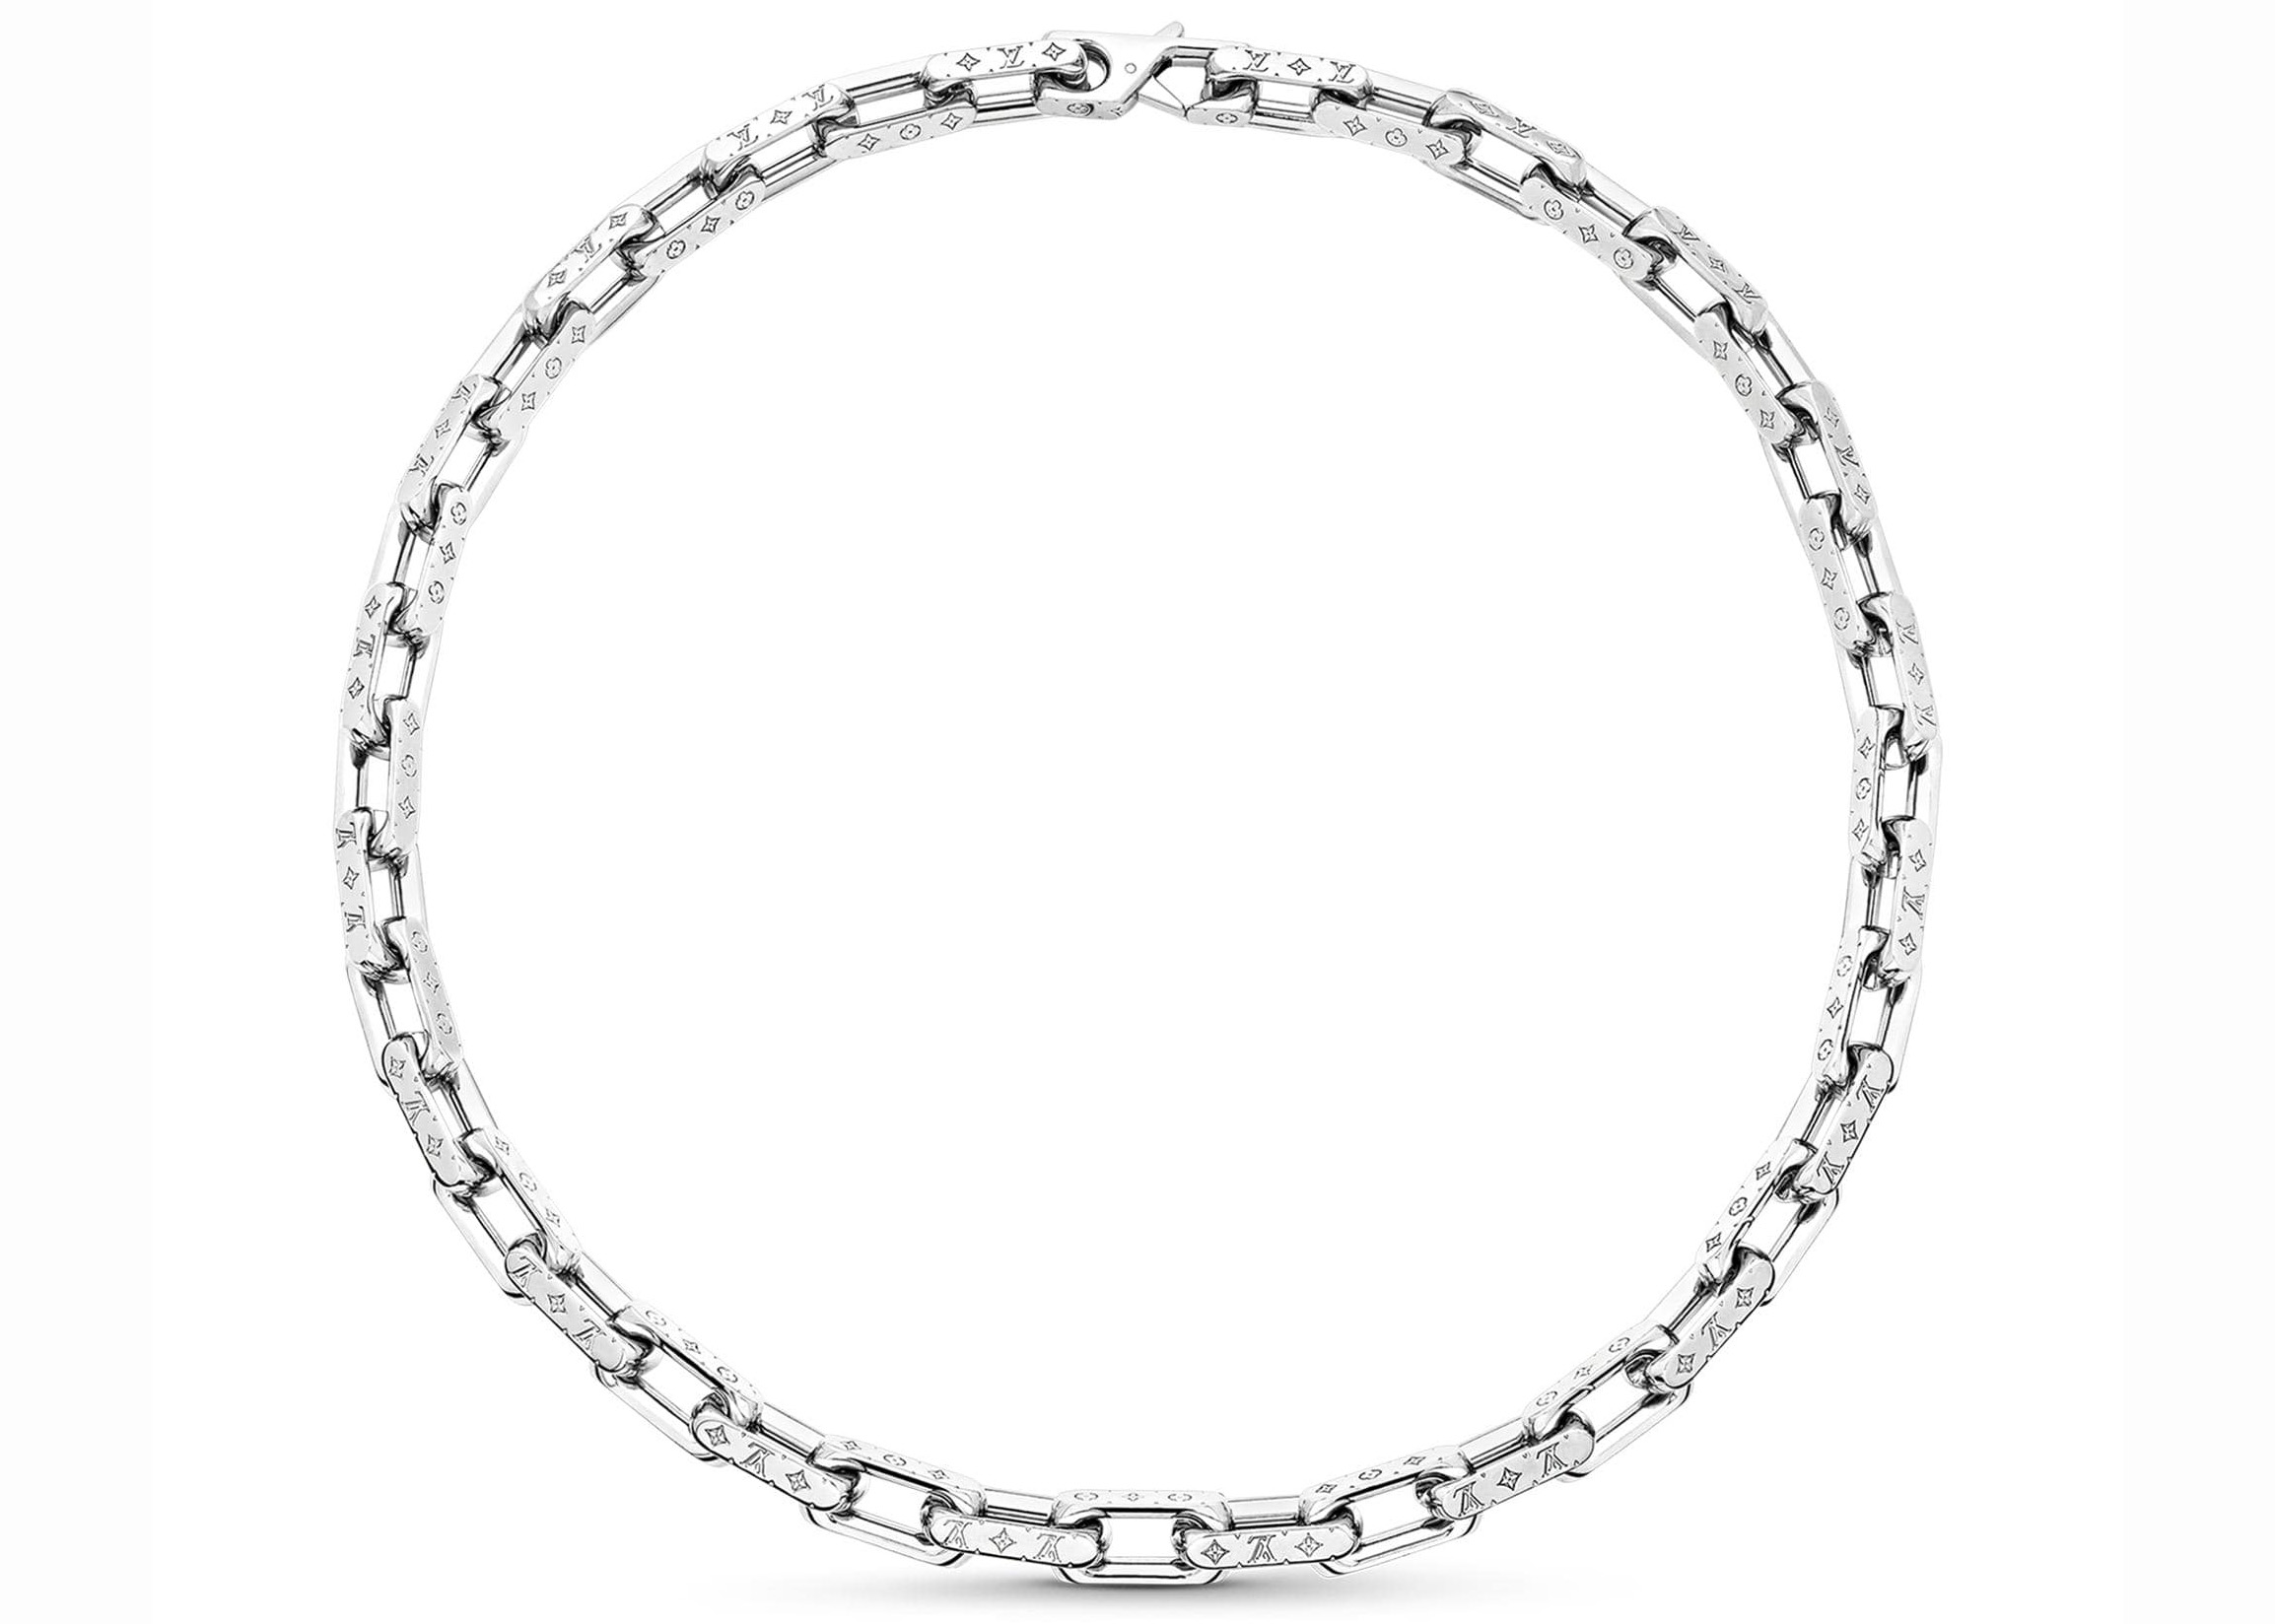 Chi tiết hơn 62 louis vuitton chain links patches necklace tuyệt vời nhất   trieuson5